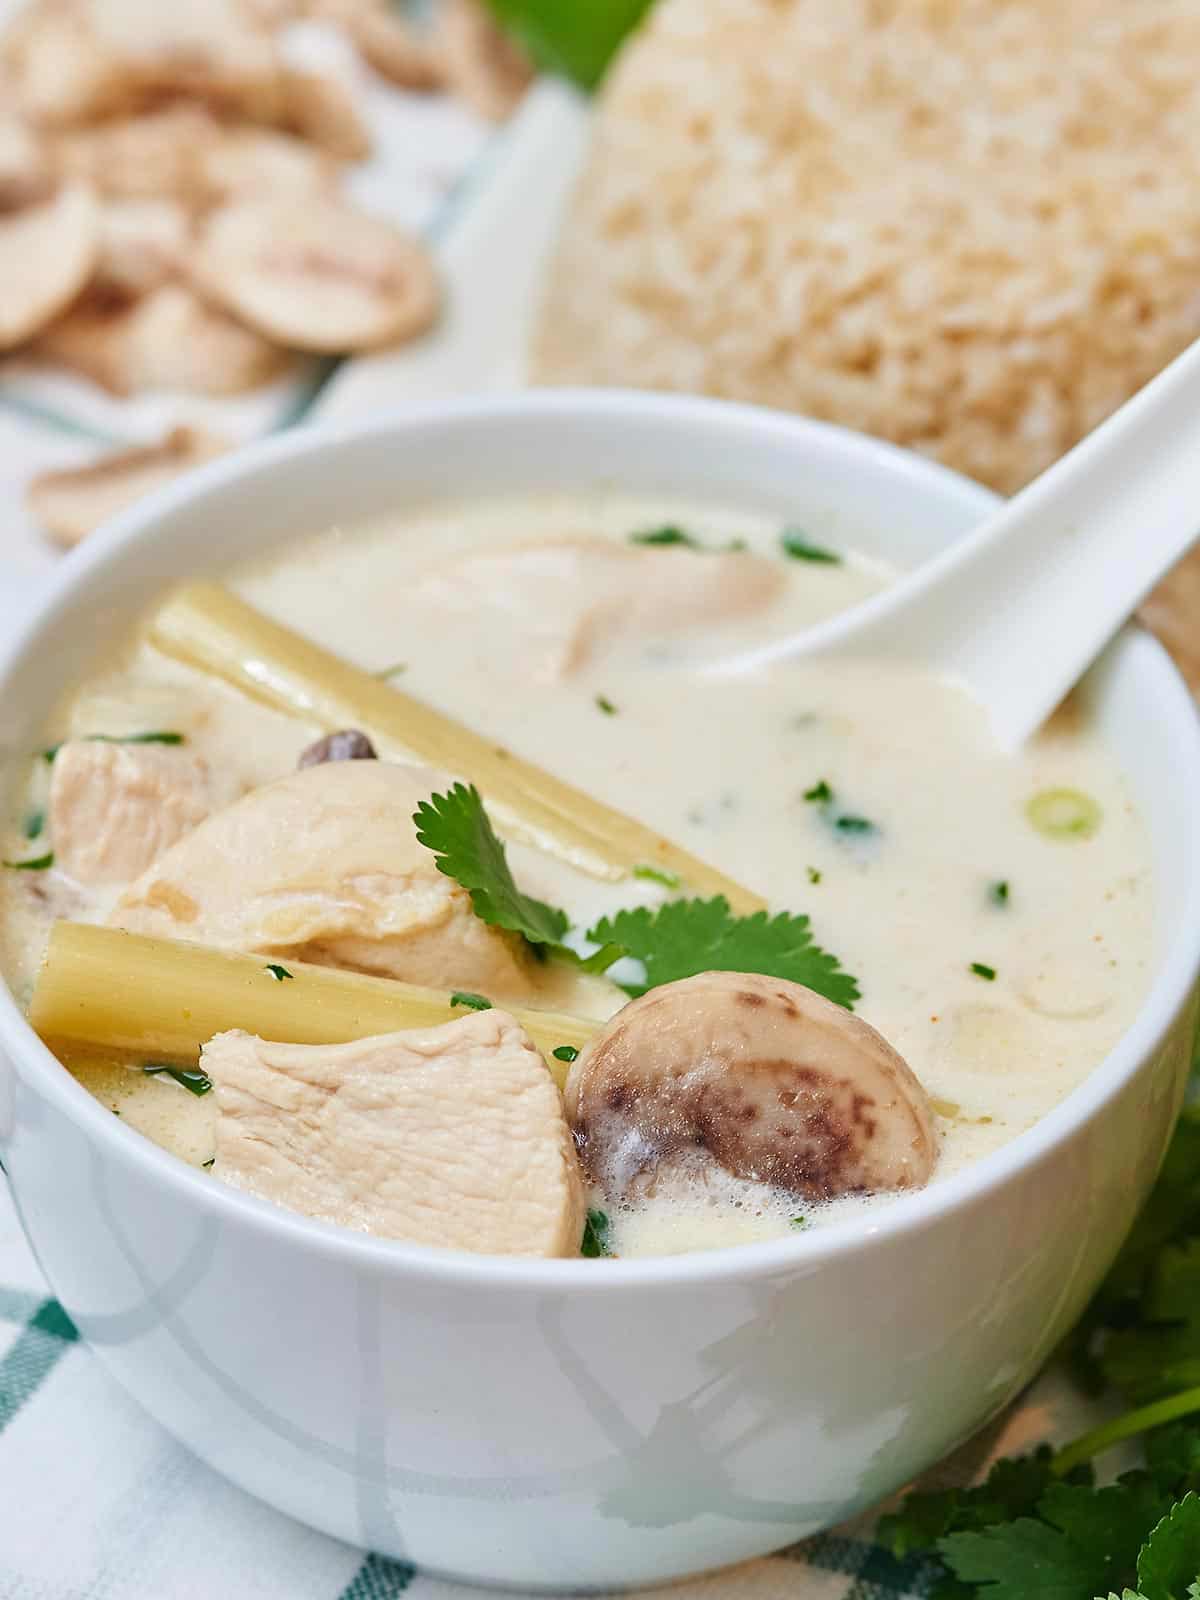 Tom Kha Gai Soup (Coconut Chicken Soup) - Show Me the Yummy